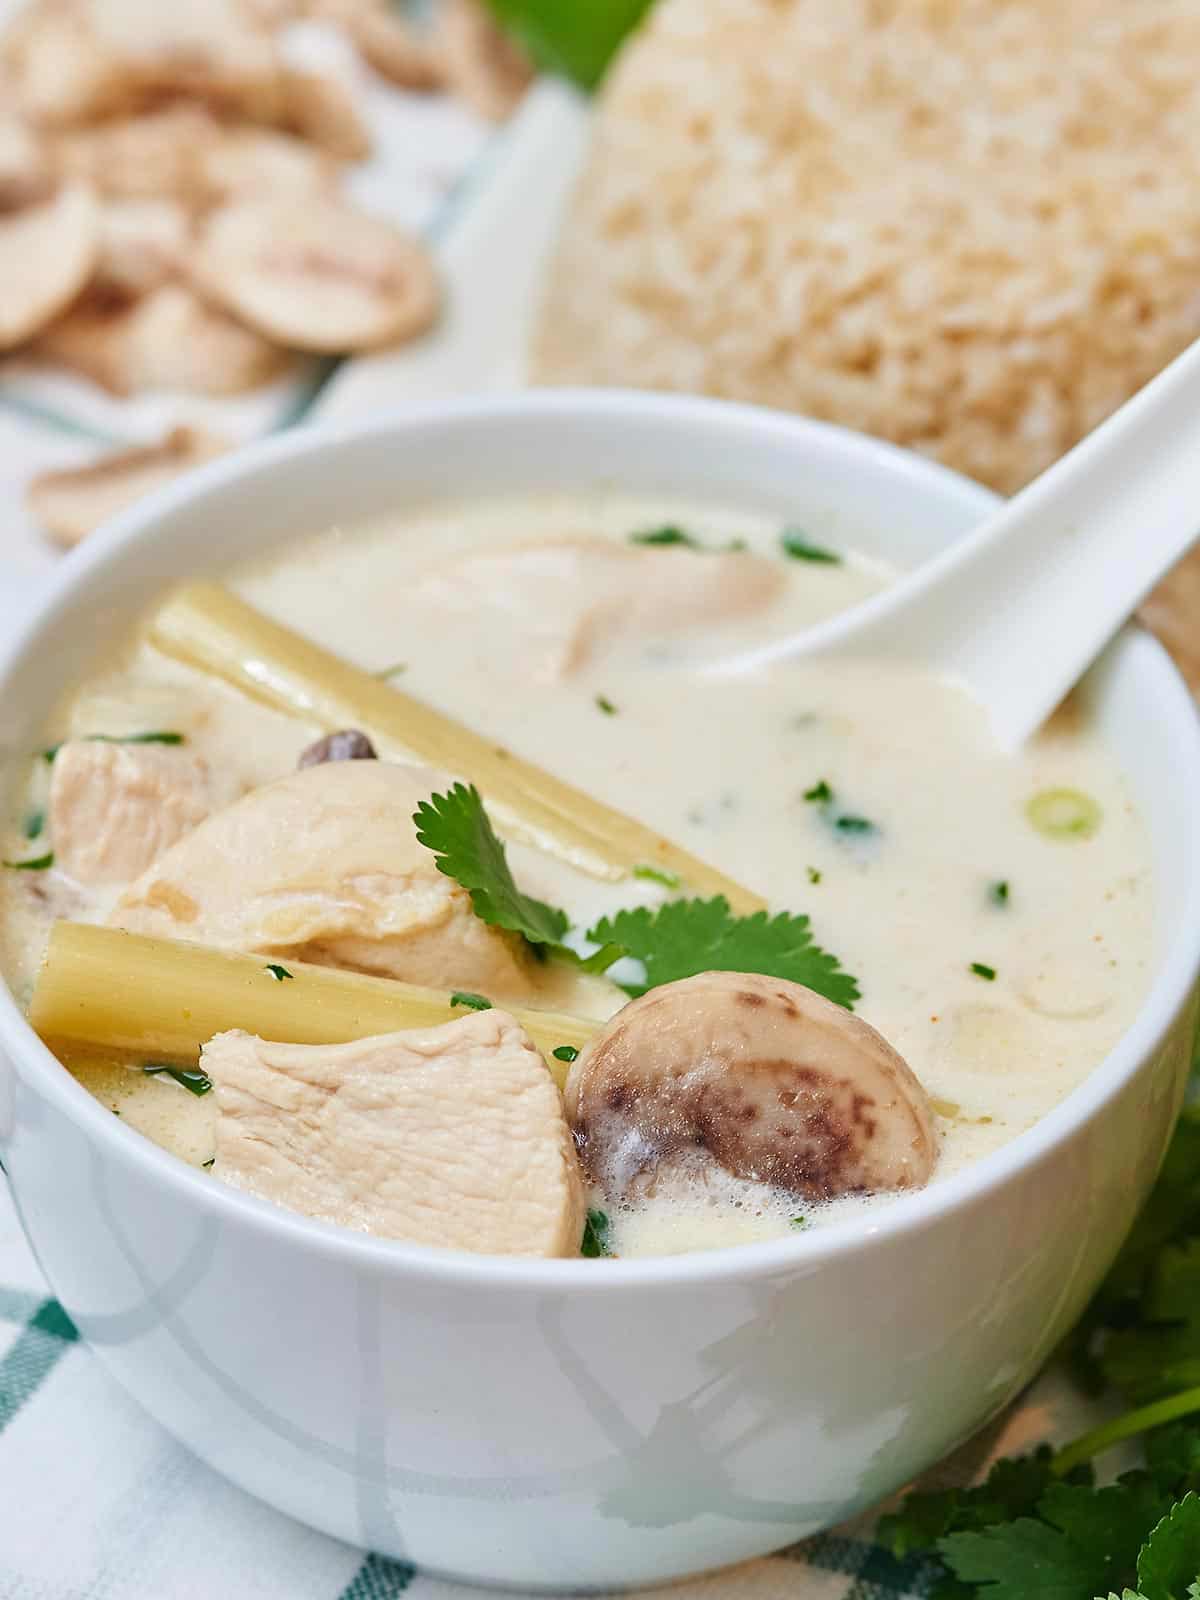 Tom Kha Gai Soup (Coconut Chicken Soup) - Show Me the Yummy